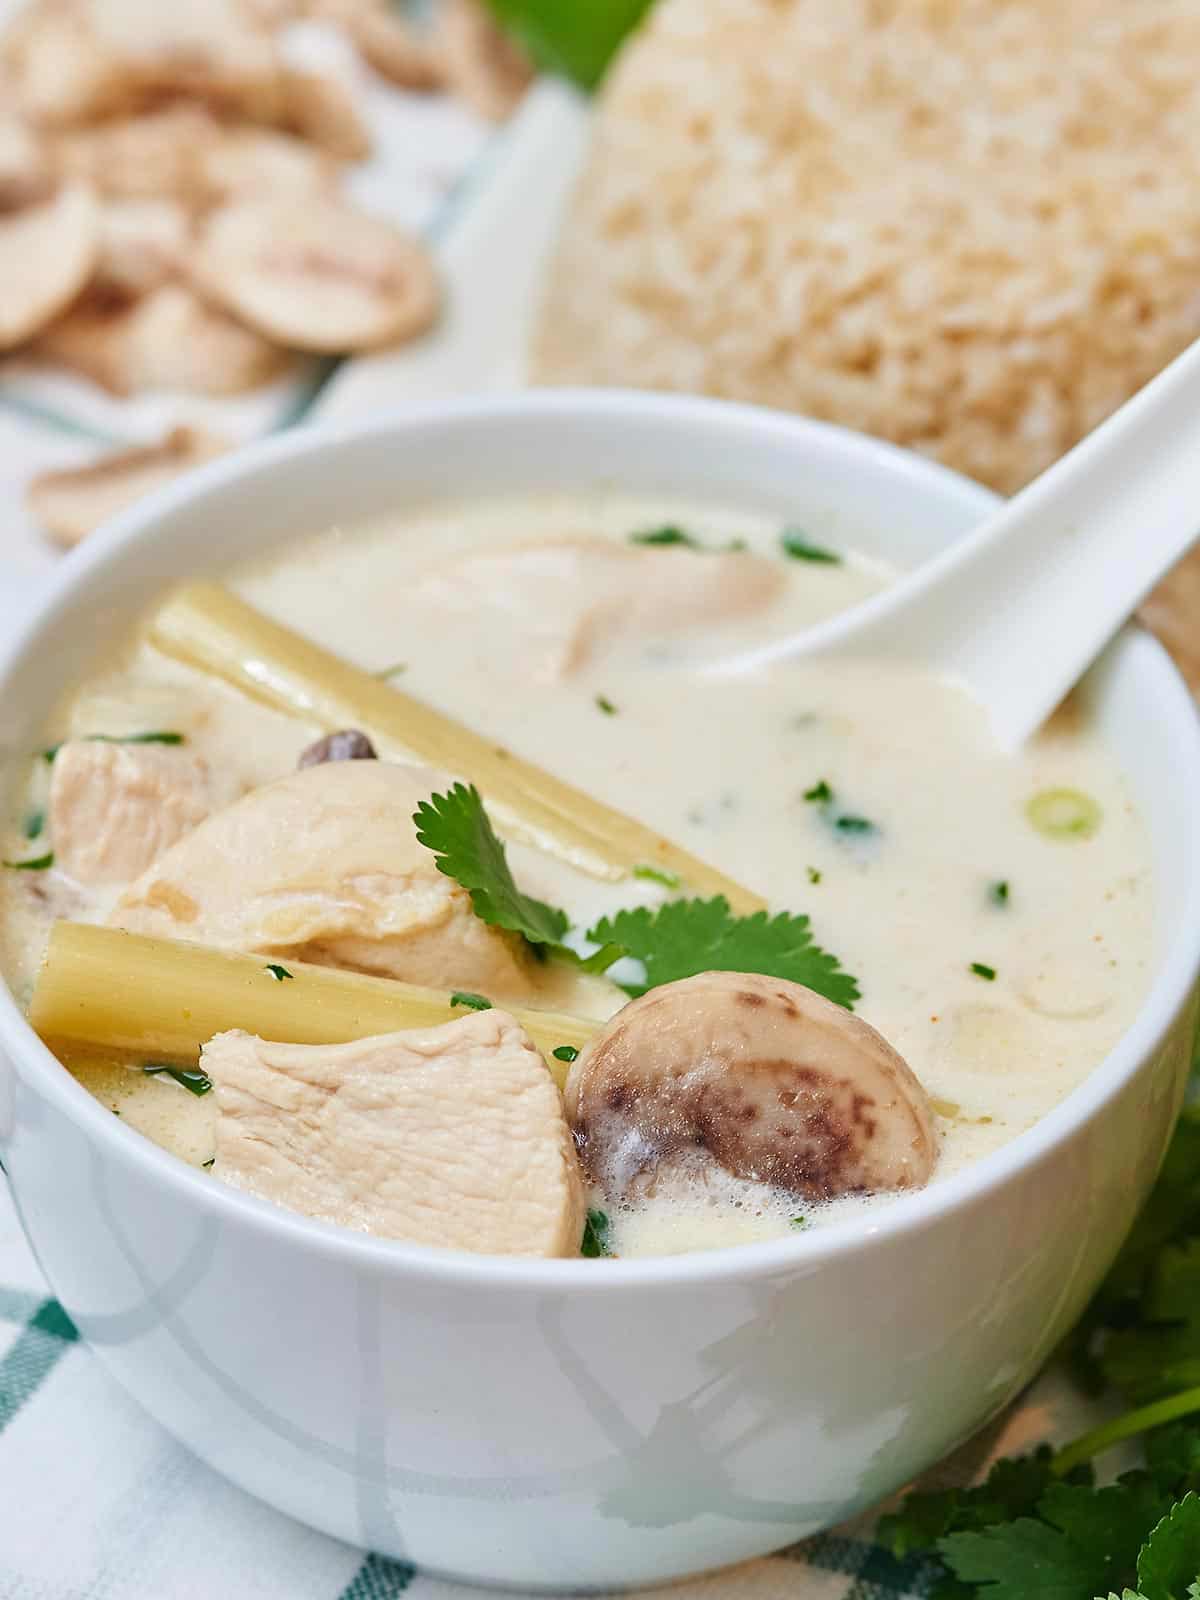 Tom Kha Gai Soup (Coconut Chicken Soup) - Show Me the Yummy